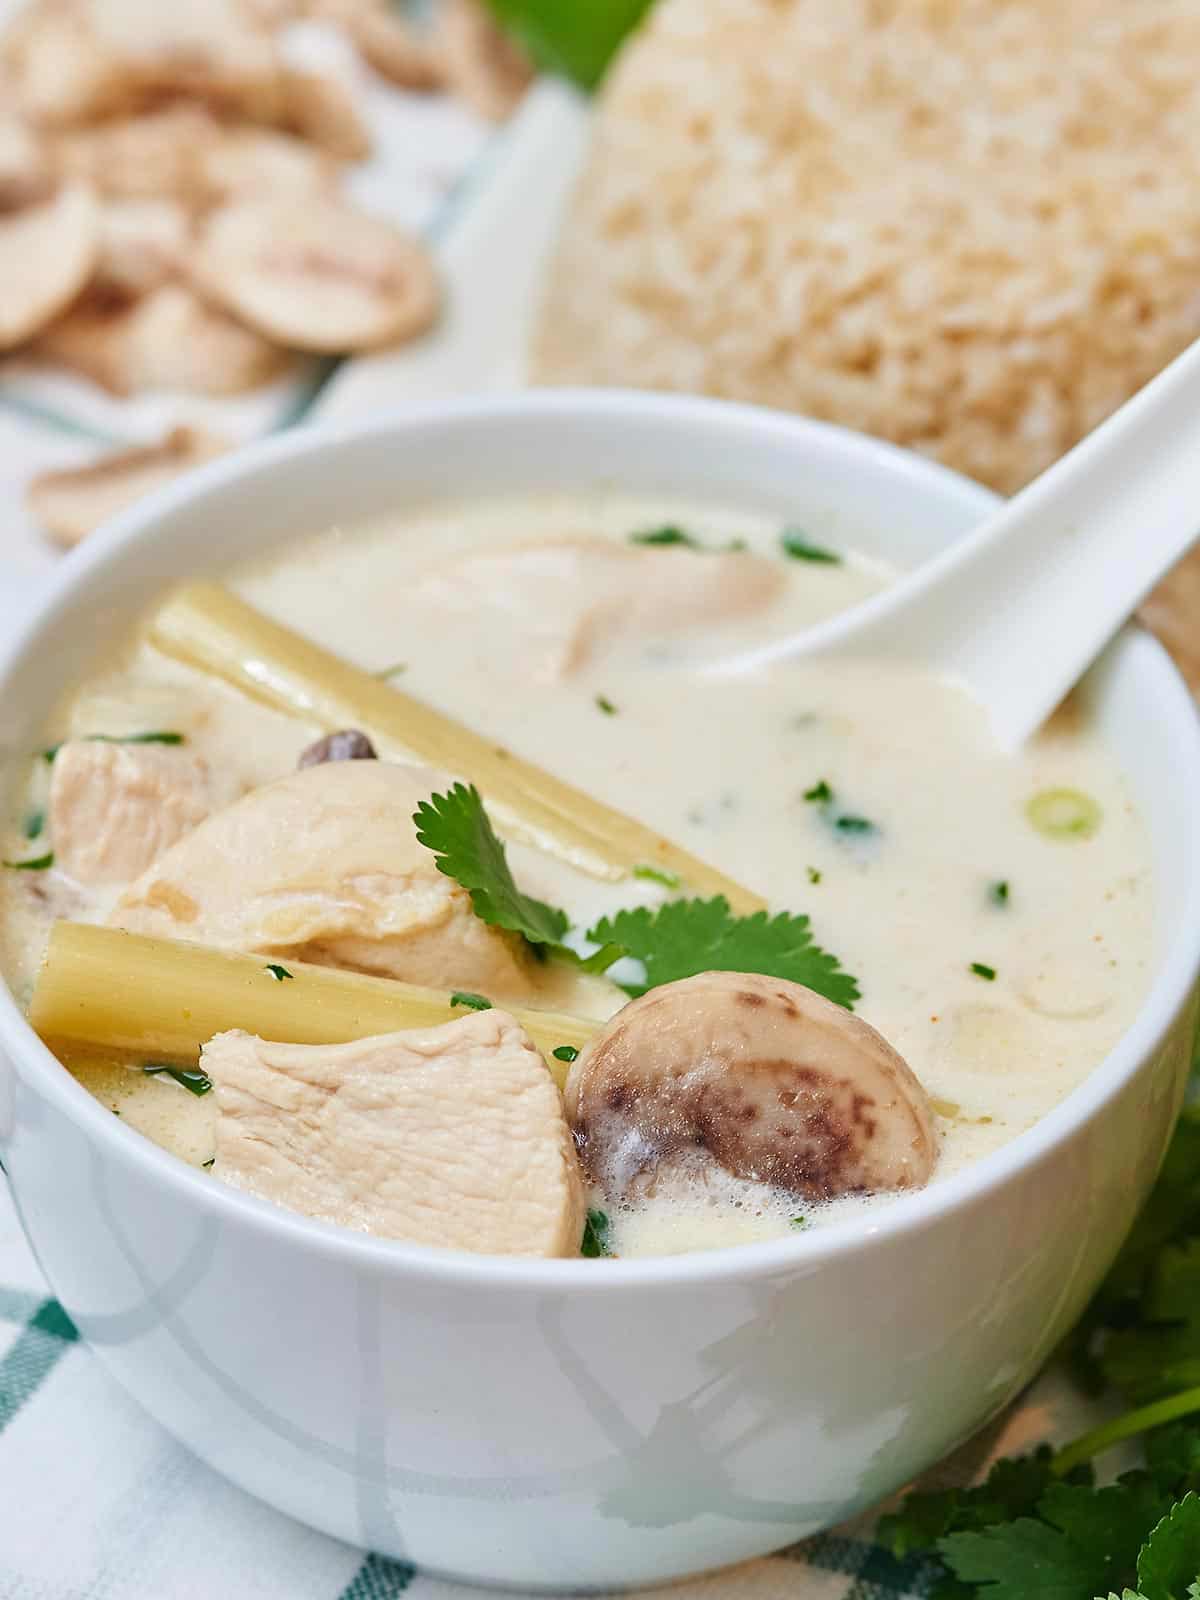 Tom Kha Gai Soup (Coconut Chicken Soup) - Show Me the Yummy